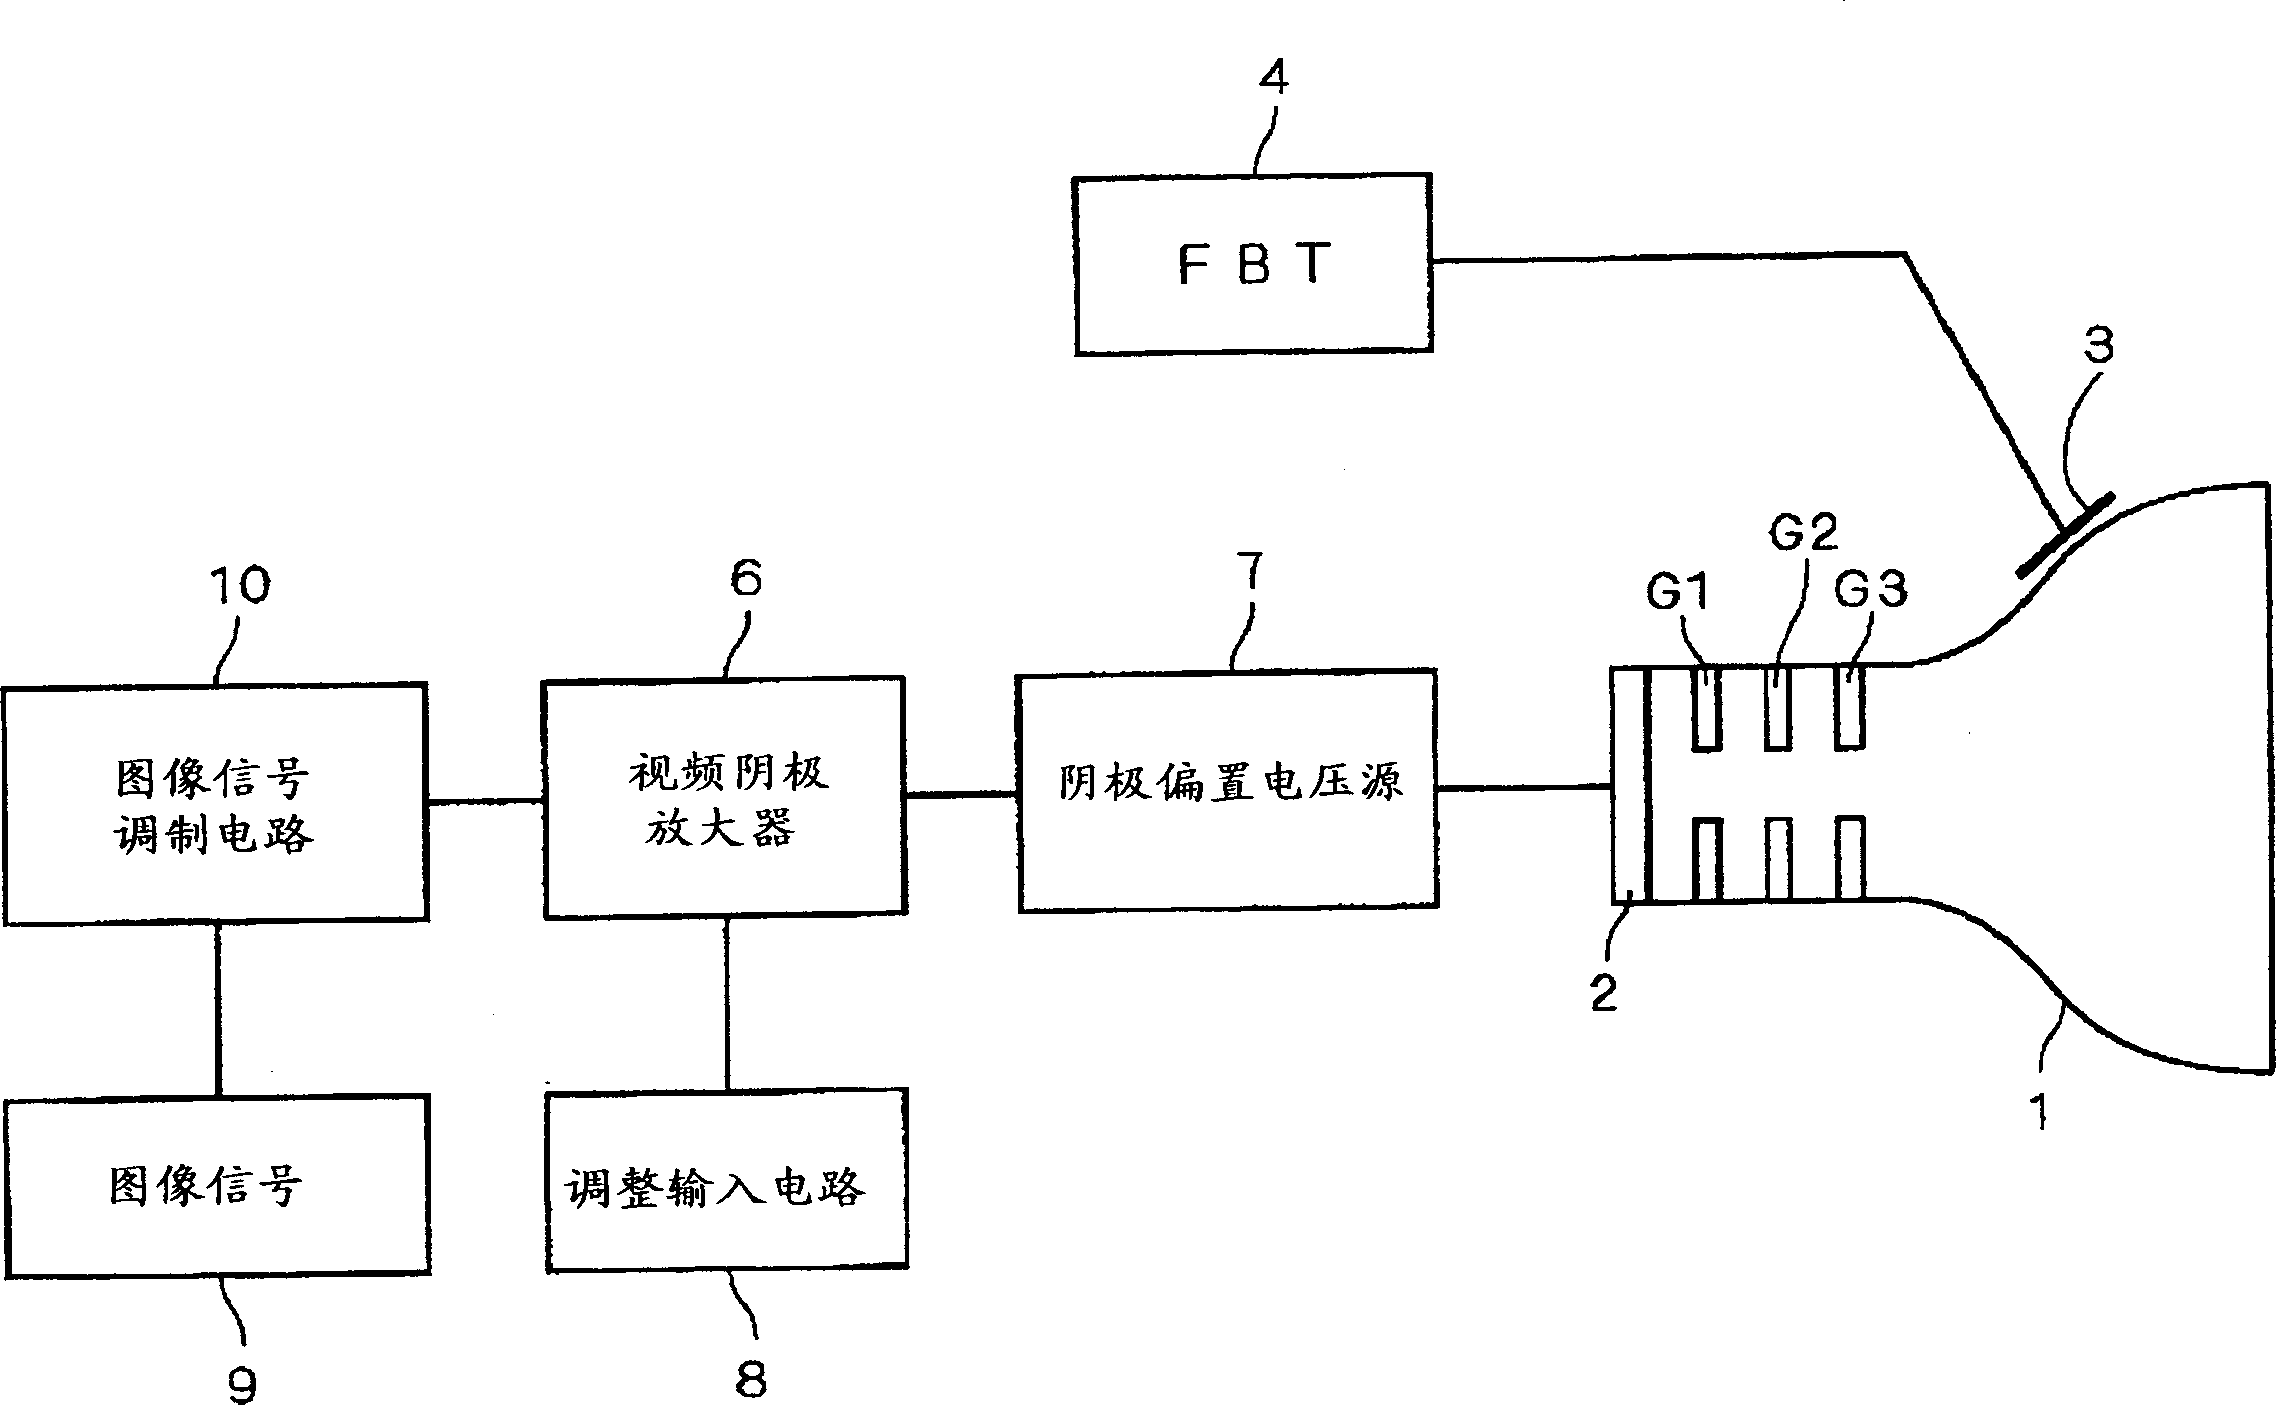 Cathode-ray tube display device